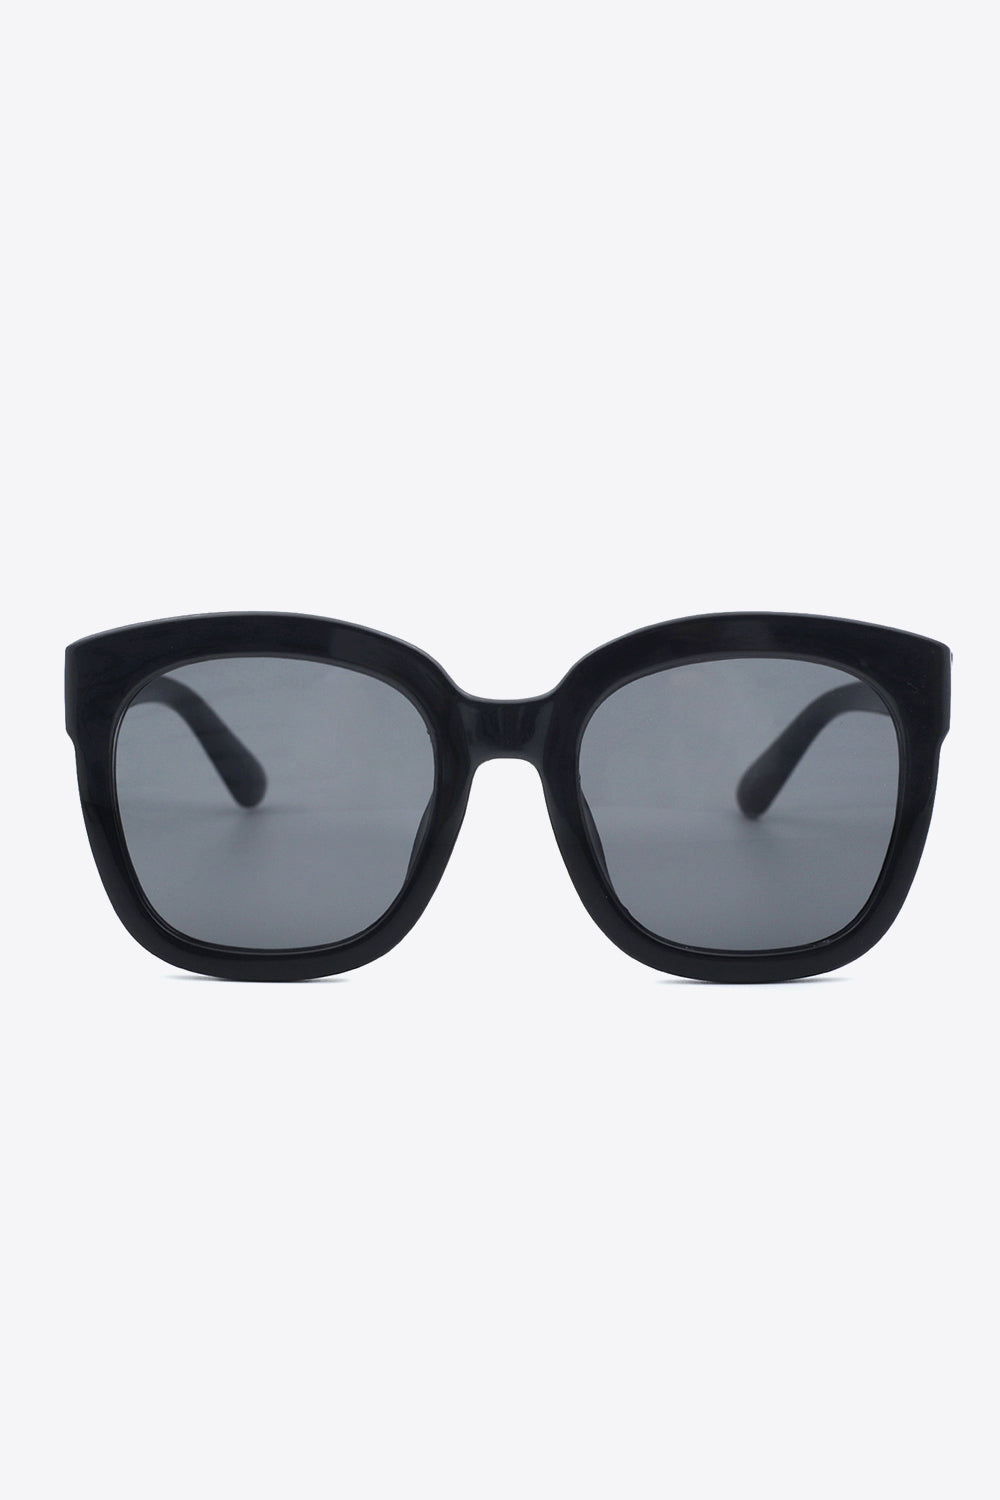 Polycarbonate Frame Square Sunglasses - The Fashion Unicorn